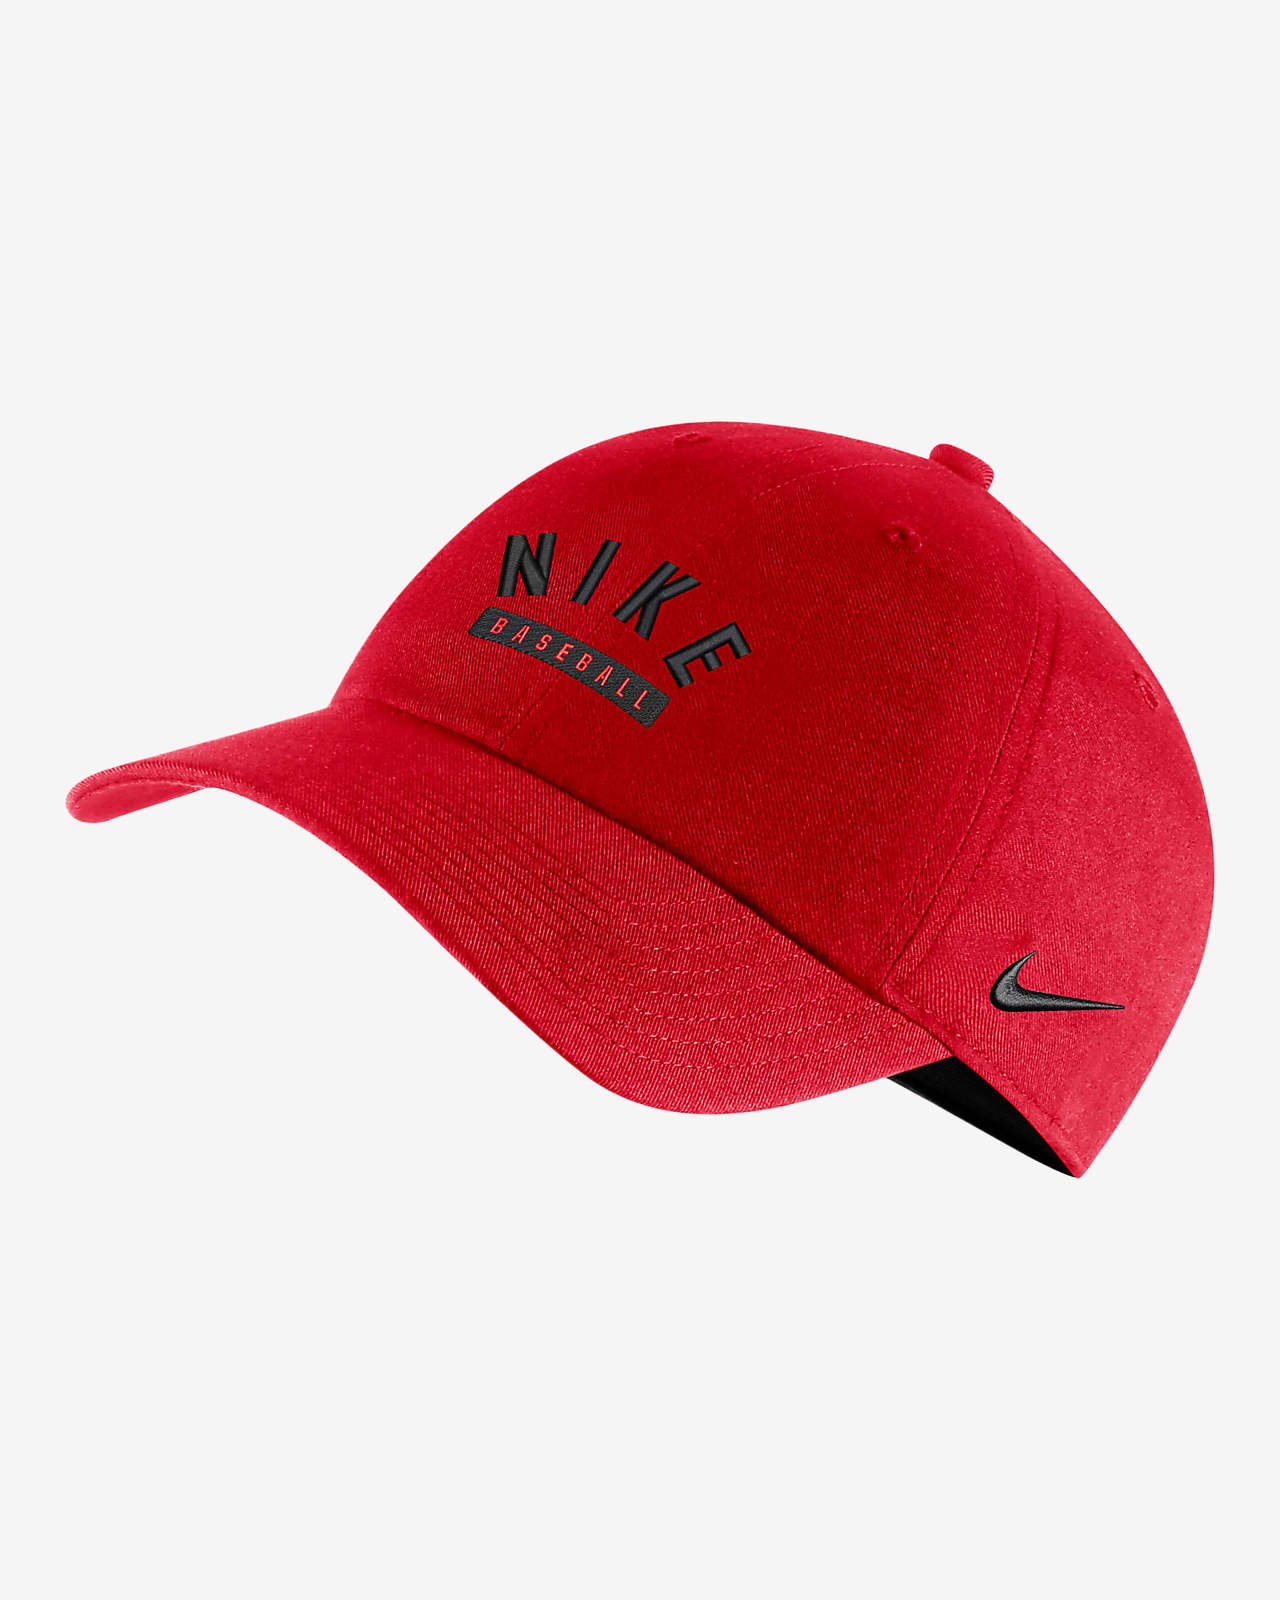 Campus Nike Baseball Cap.